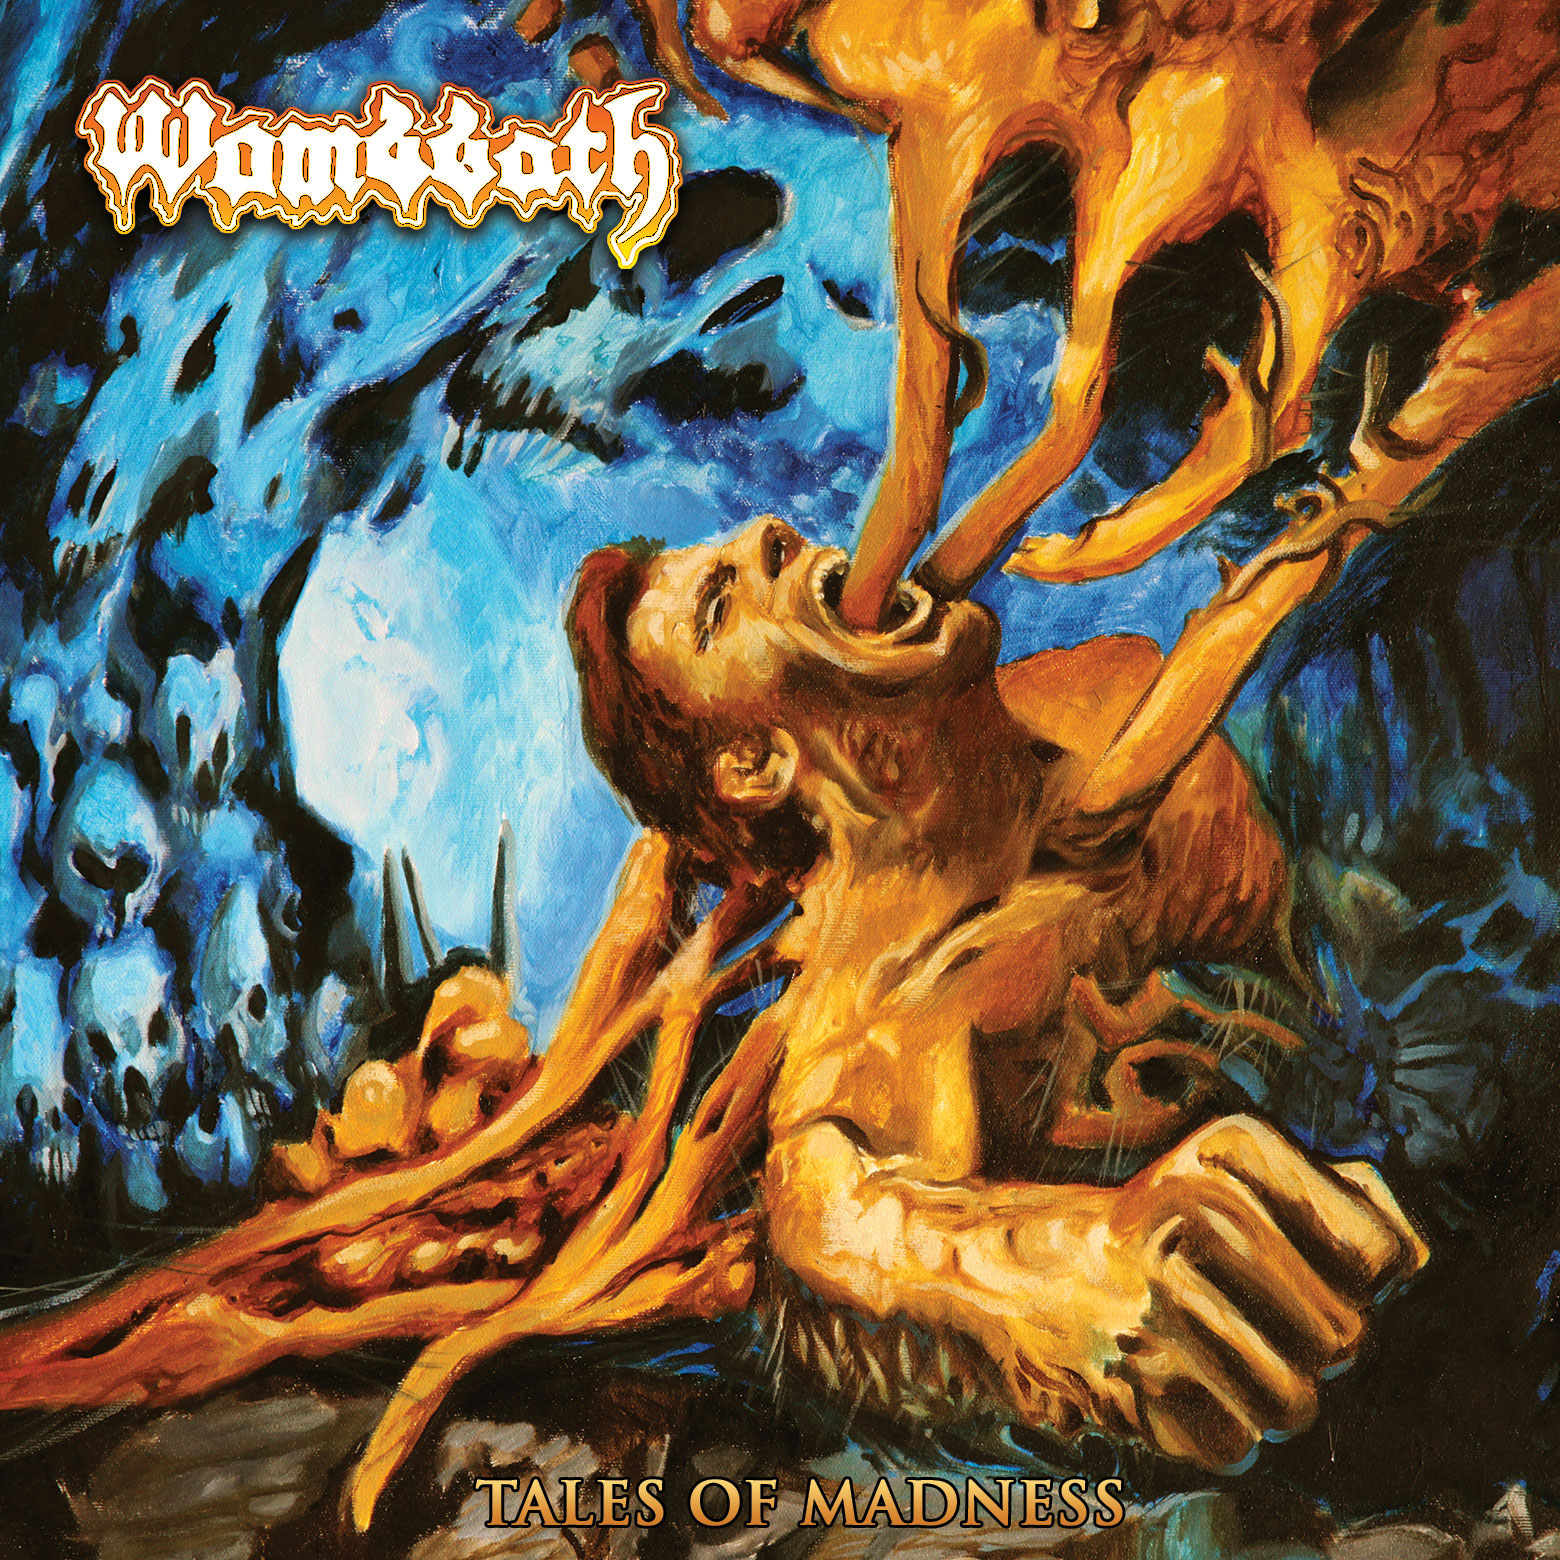 wombbath – tales of madness